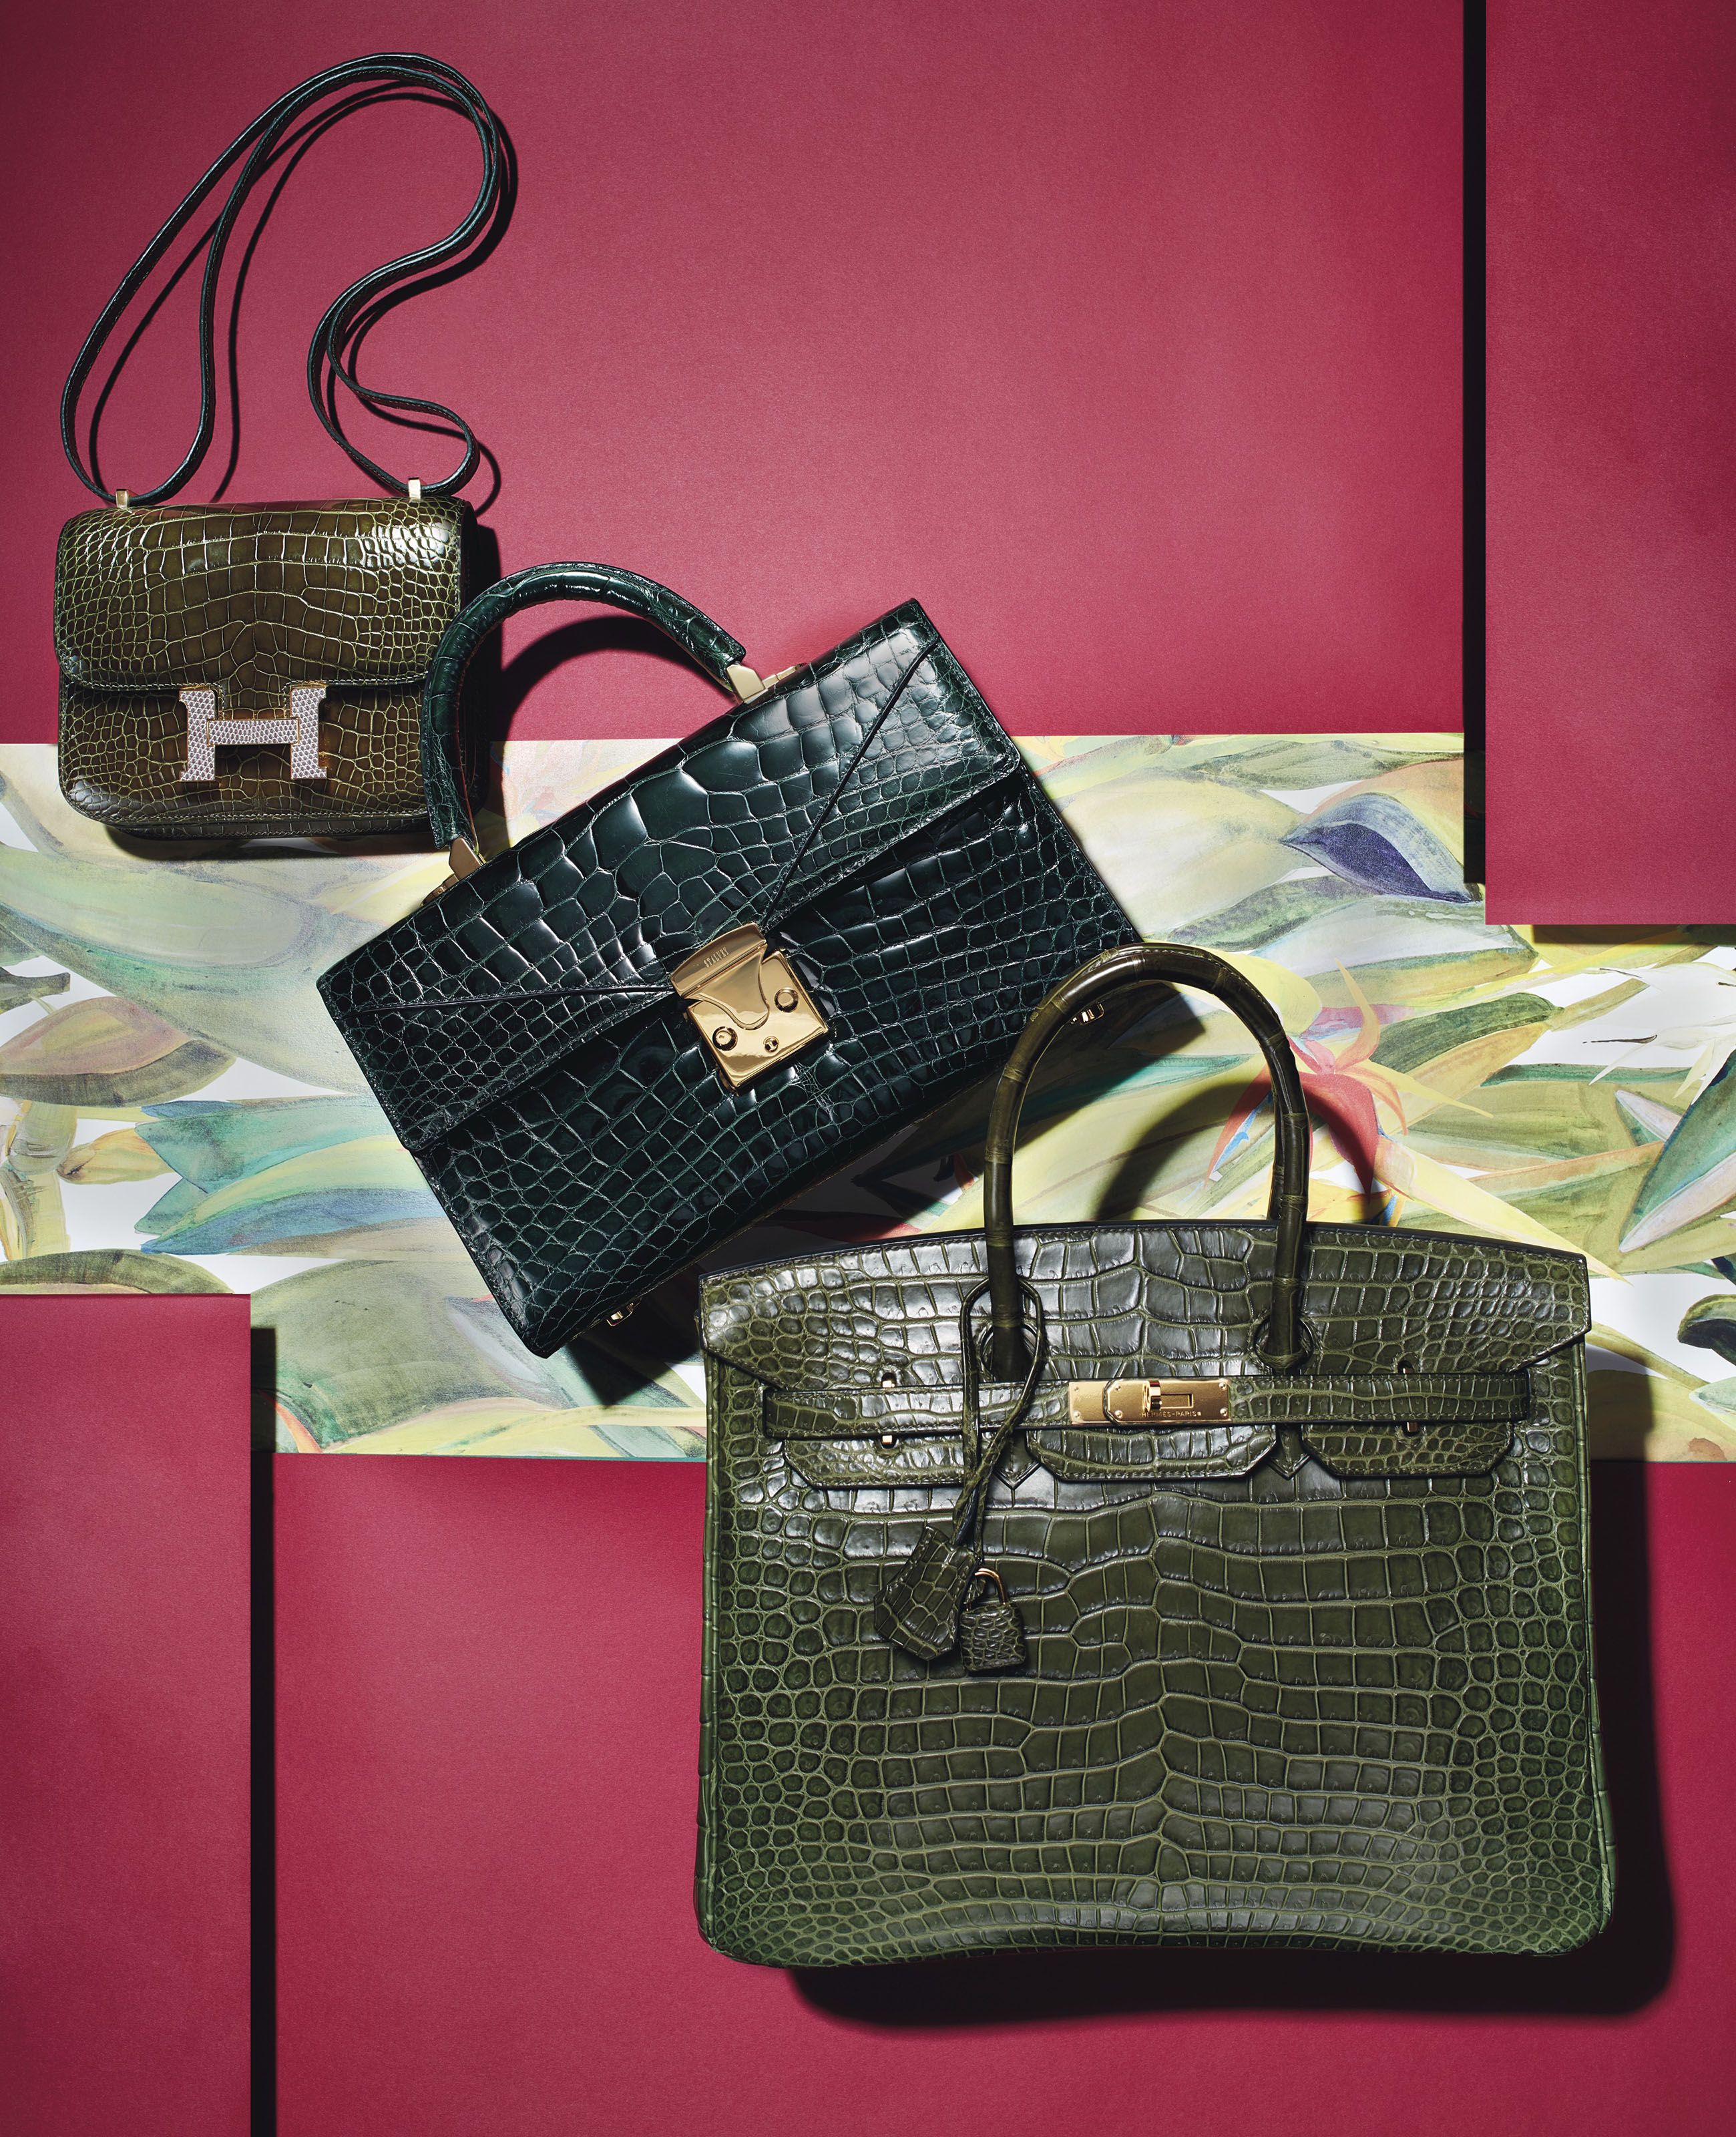 Hermès Birkin handbag sells for £162,500 at Christie's auction